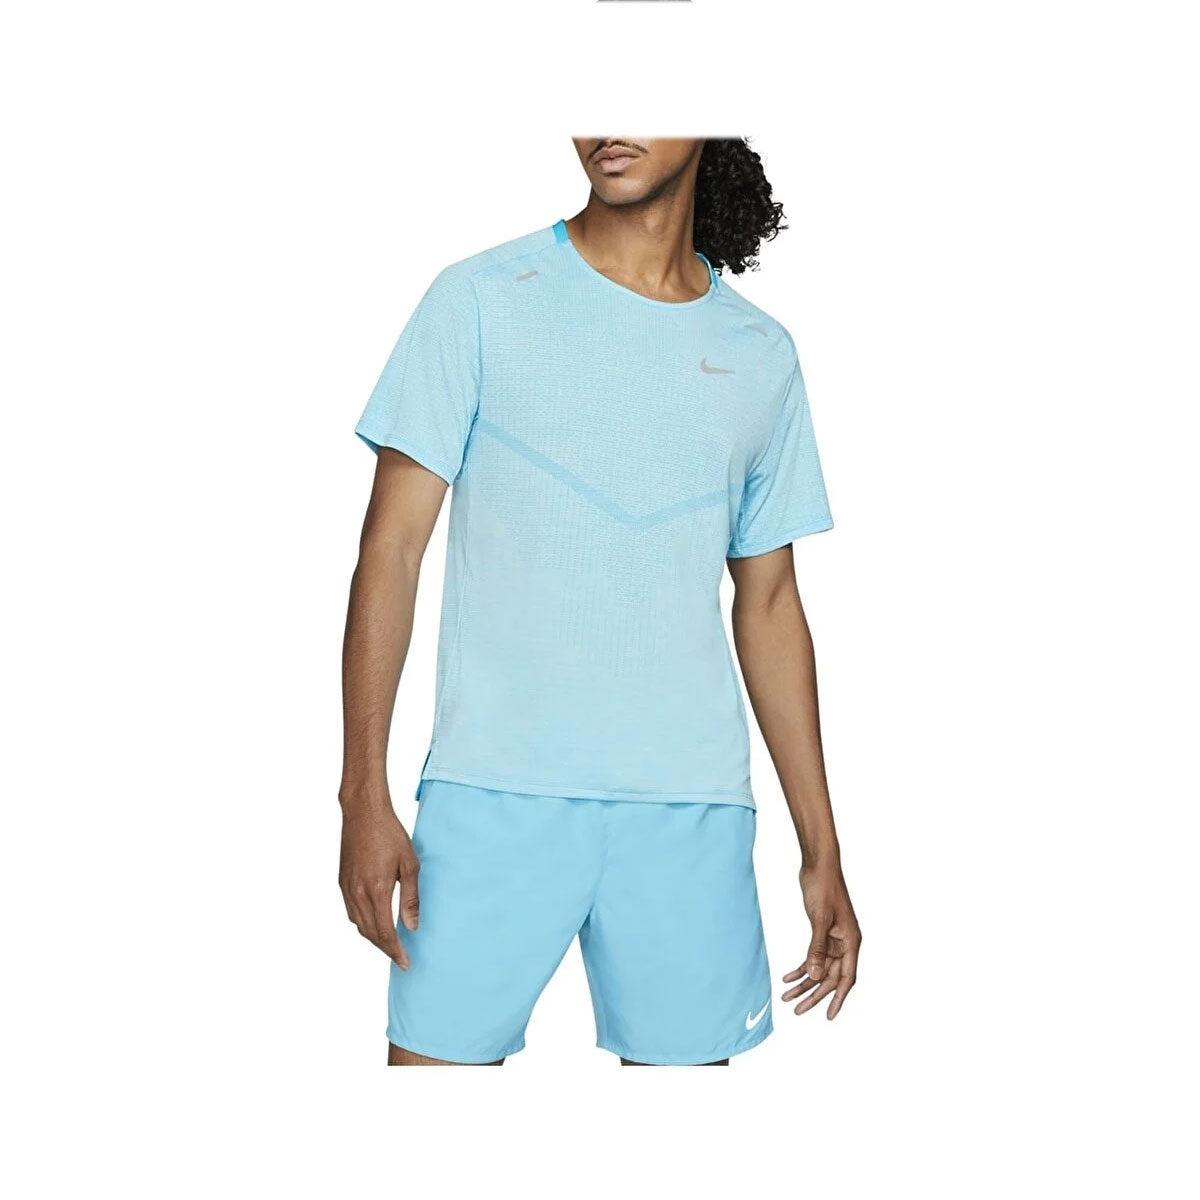 Nike Men's Dri-FIT ADV Run Division TechKnit Short-Sleeve Blue - KickzStore